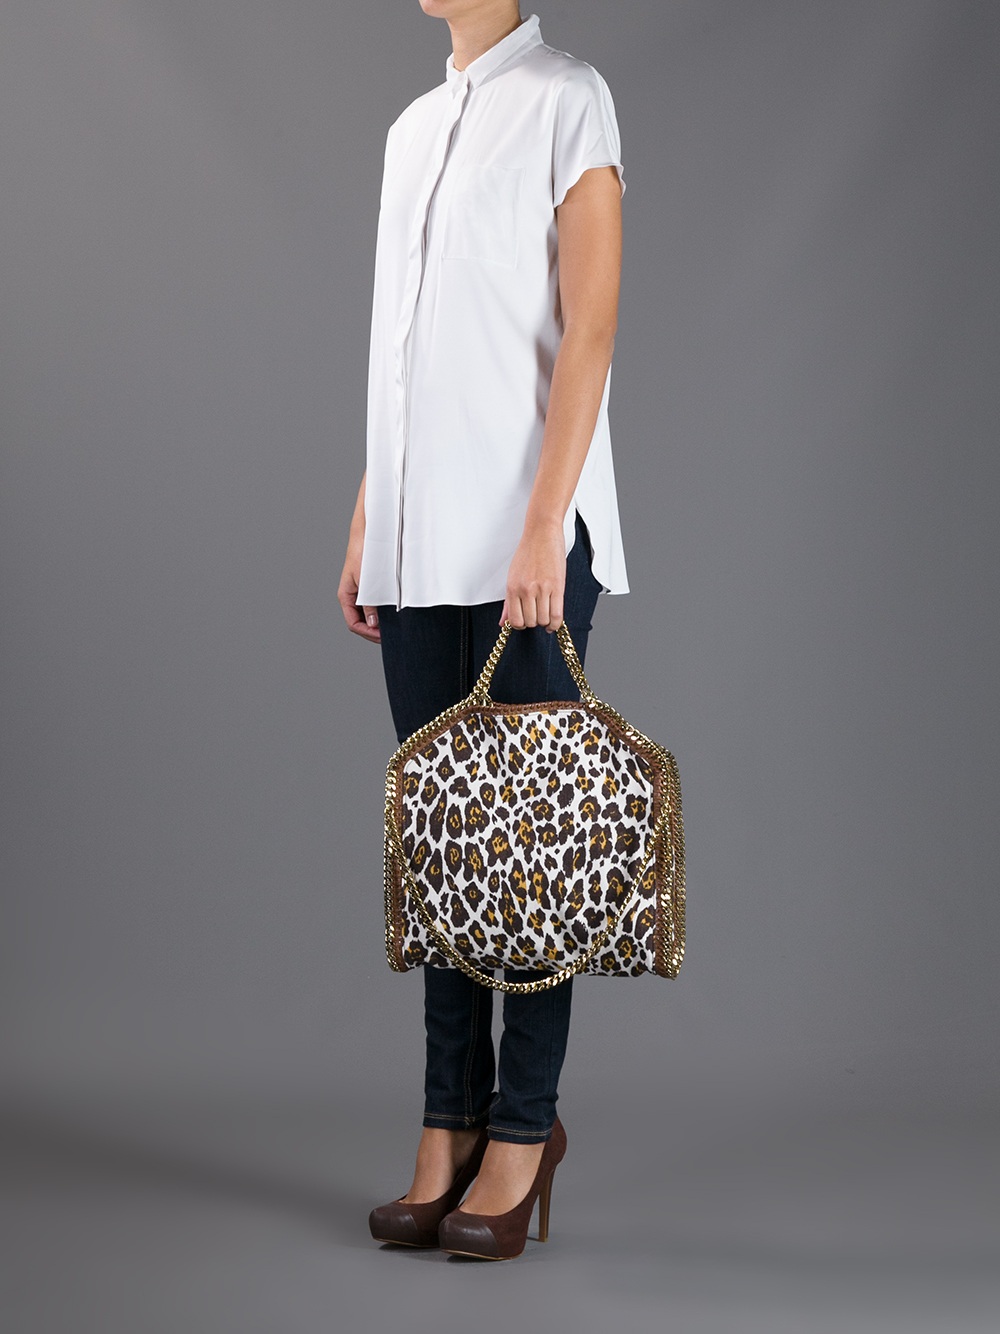 Stella McCartney Leopard Print Bag | Lyst